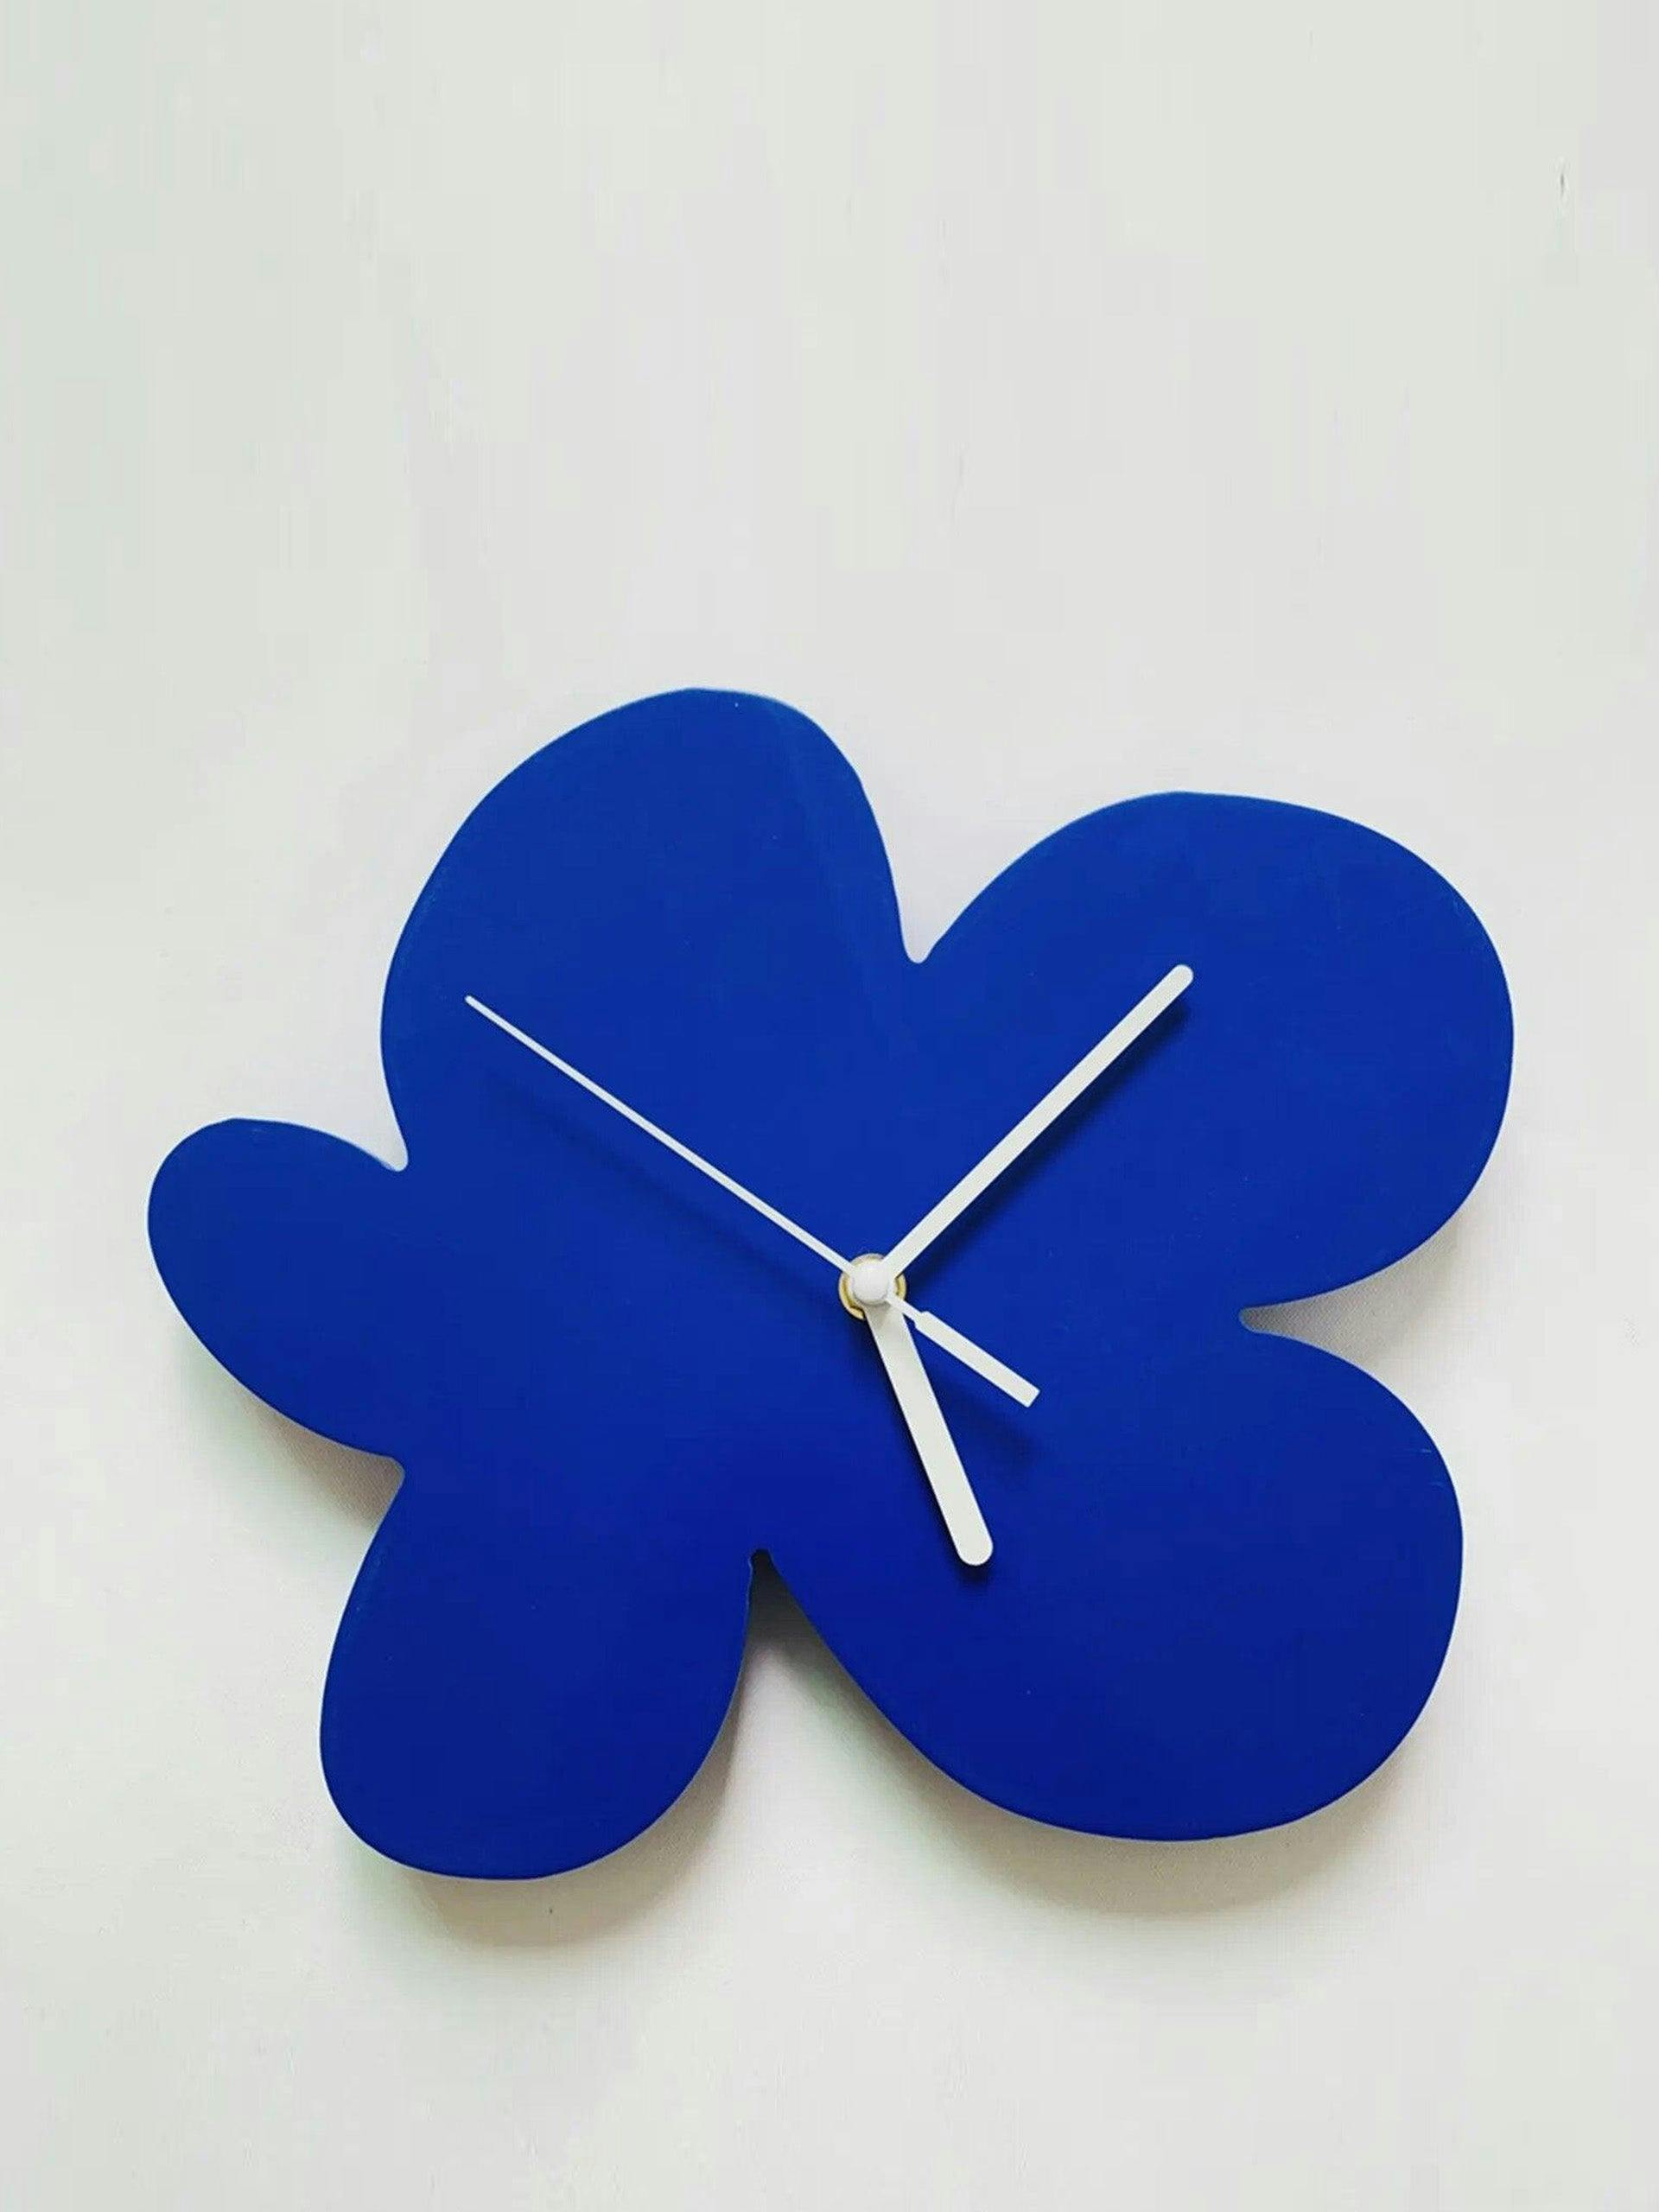 Floral blue wall clock